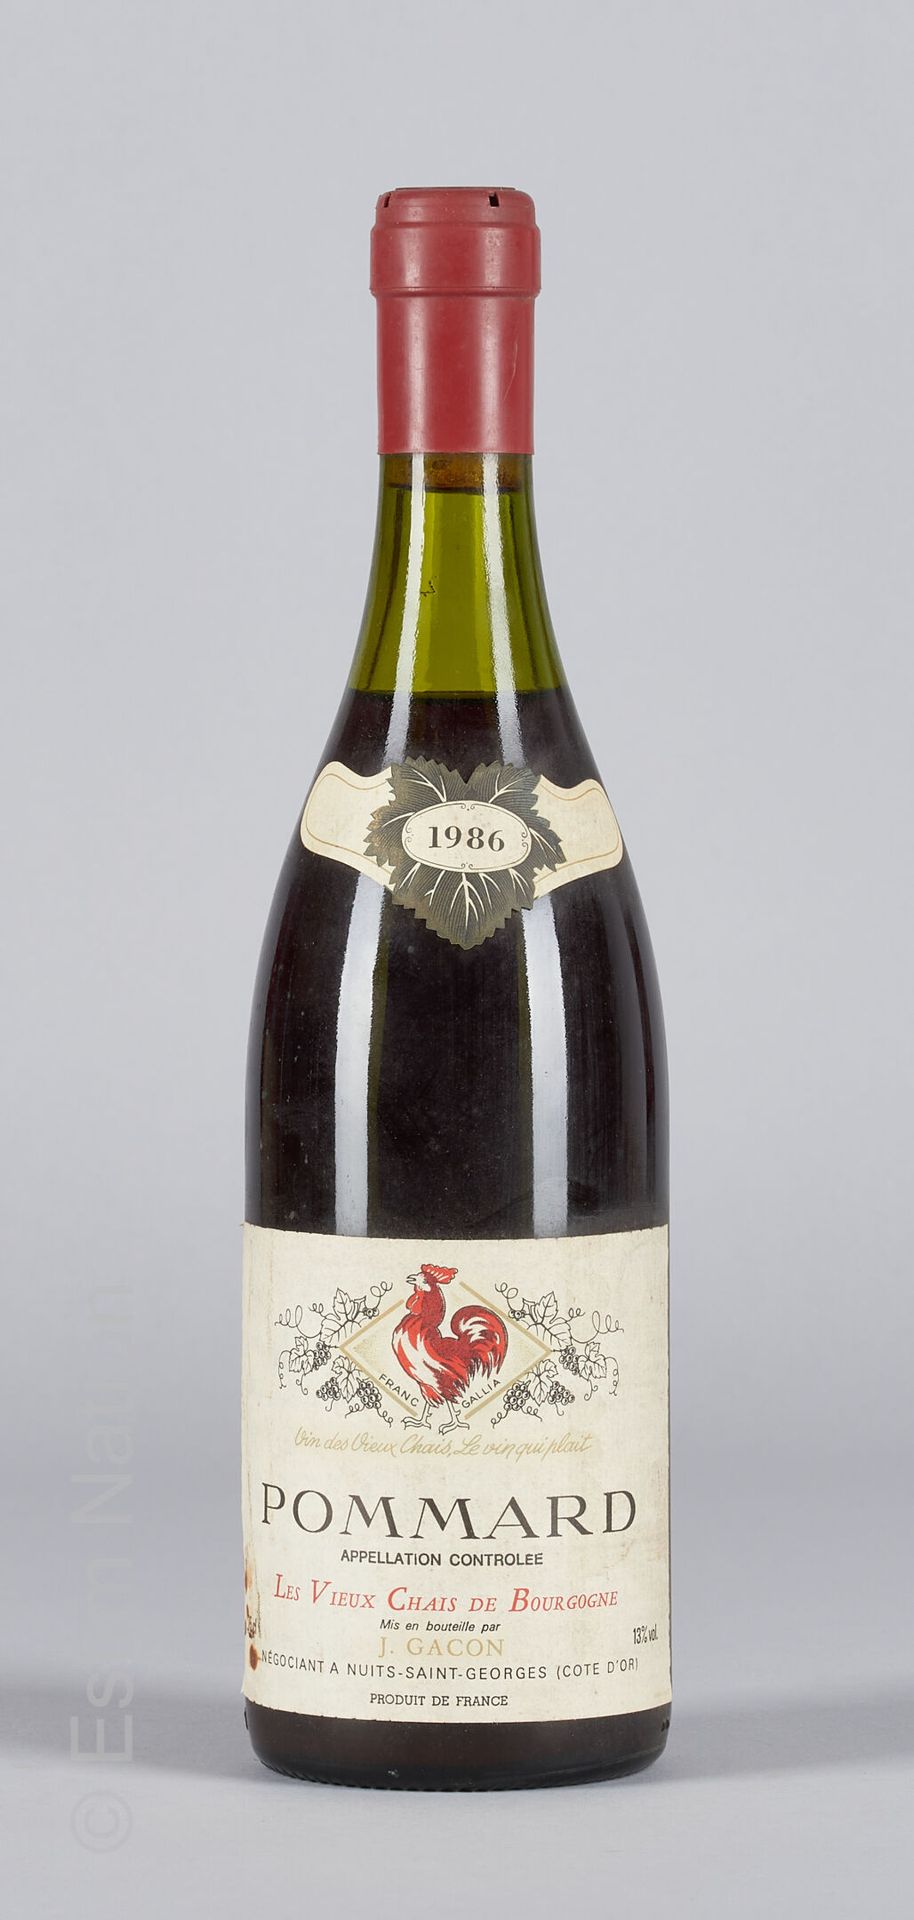 BOURGOGNE 1 bottle of Pommard 1986 Les vieux chais de Bourgogne J. Gacon

(N. Be&hellip;